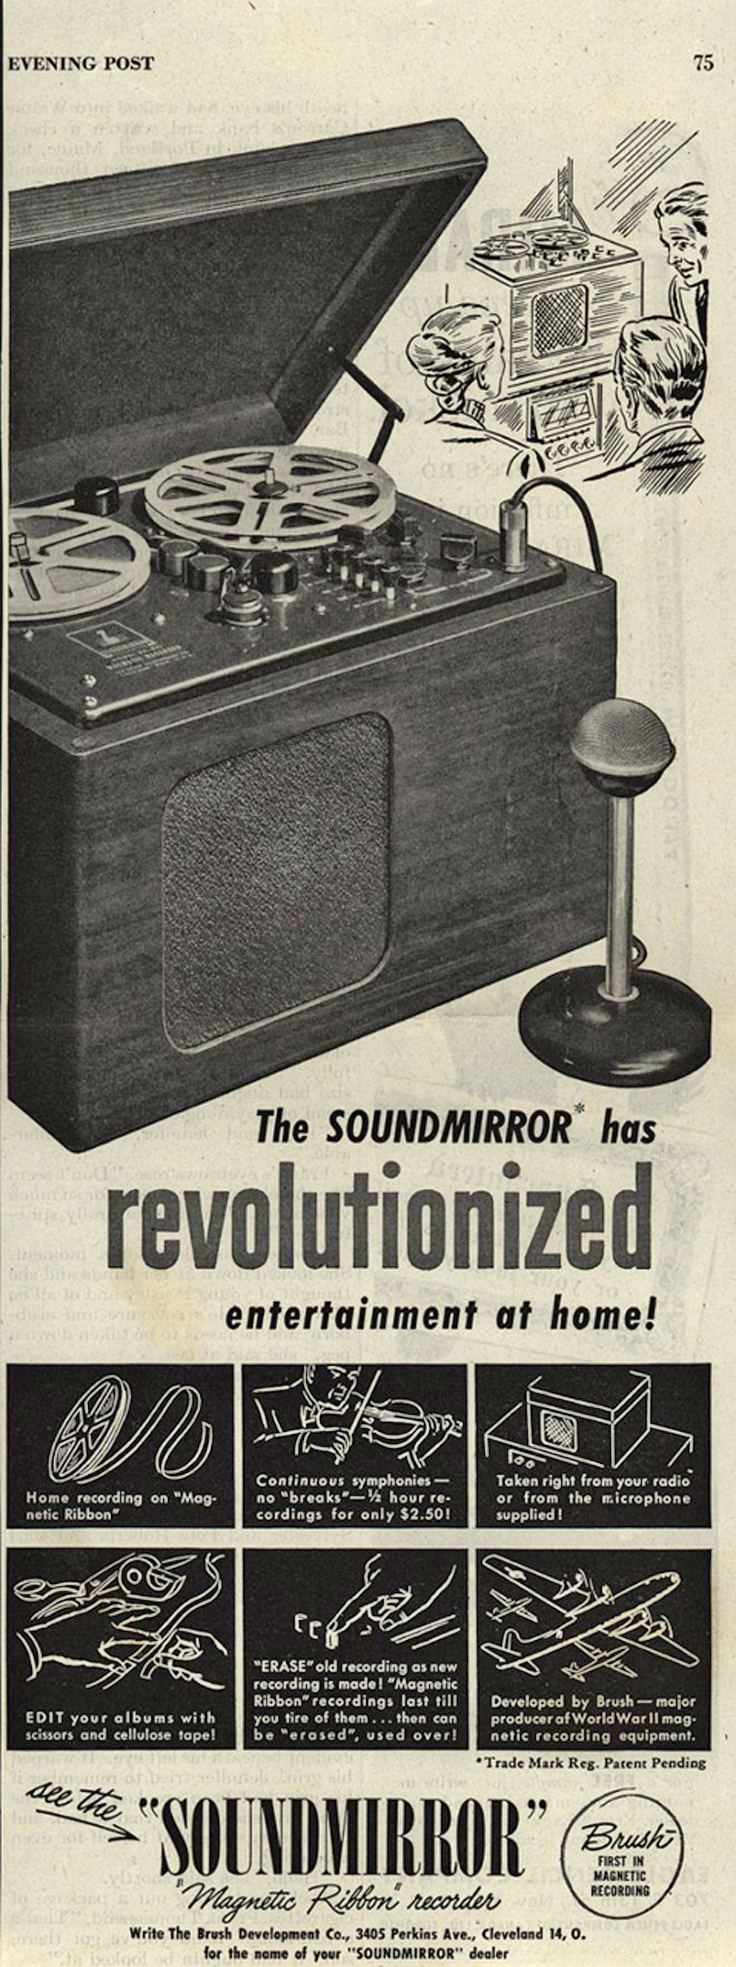 Vintage Osborne Kemper Thomas Inc Advertising Small Measuring Tape 1950's  70 in